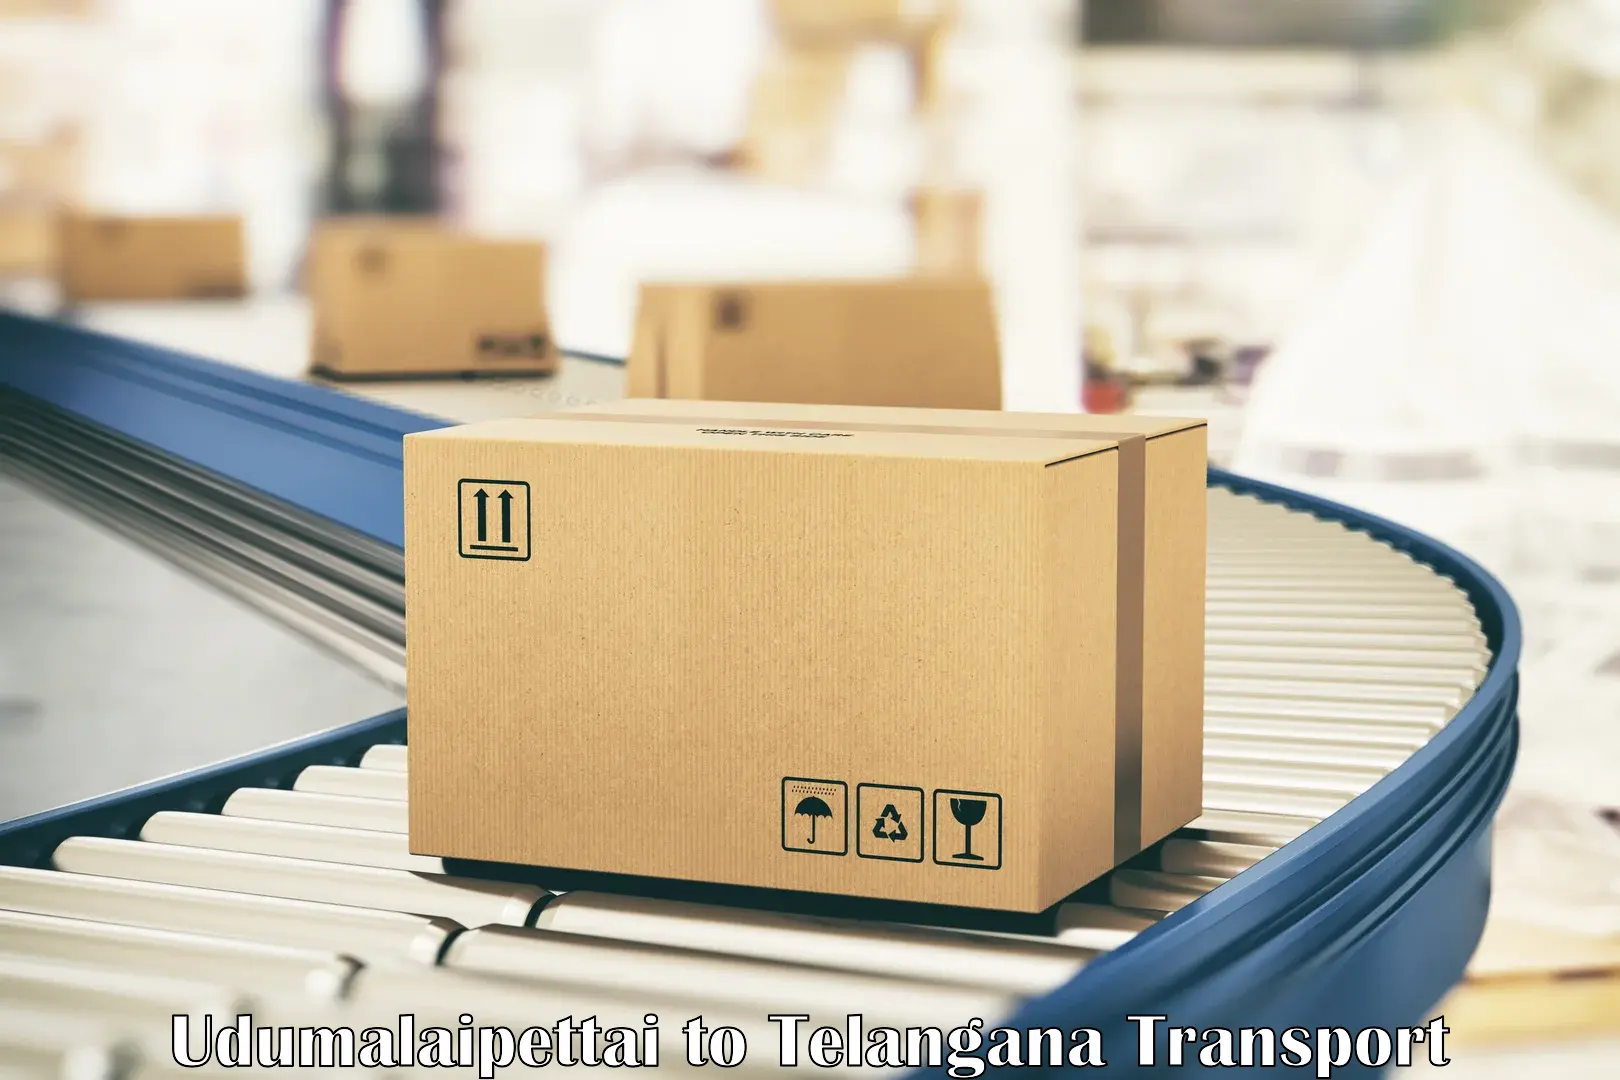 Container transportation services in Udumalaipettai to Manneguda